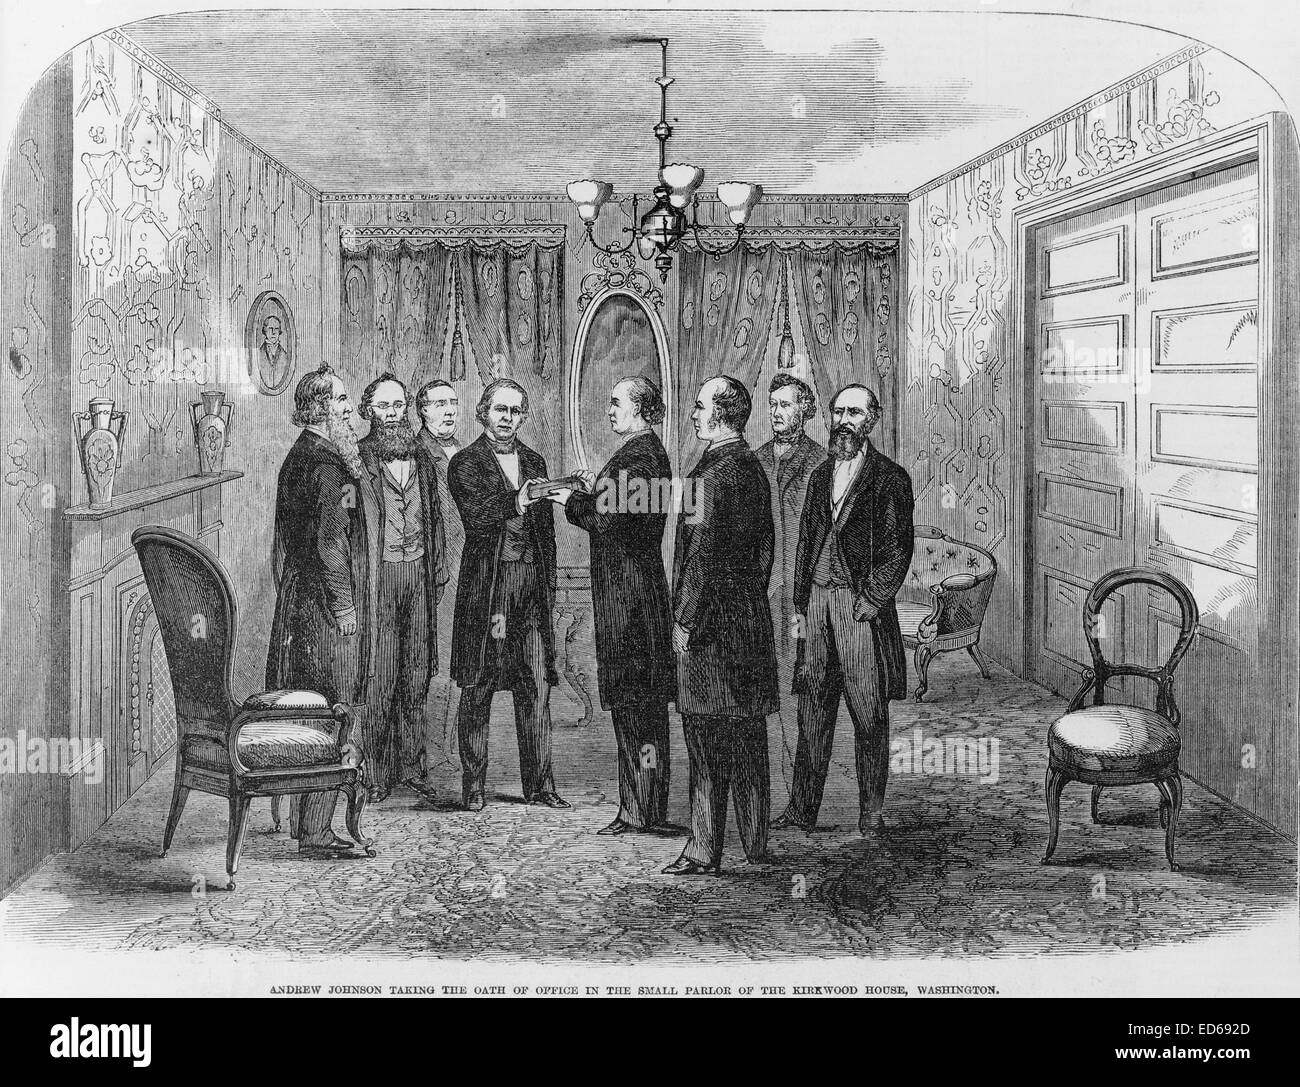 Andrew Johnson unter den Amtseid in der kleinen Stube der Kirkwood House Hotel, Washington, 15. April 1865 Stockfoto